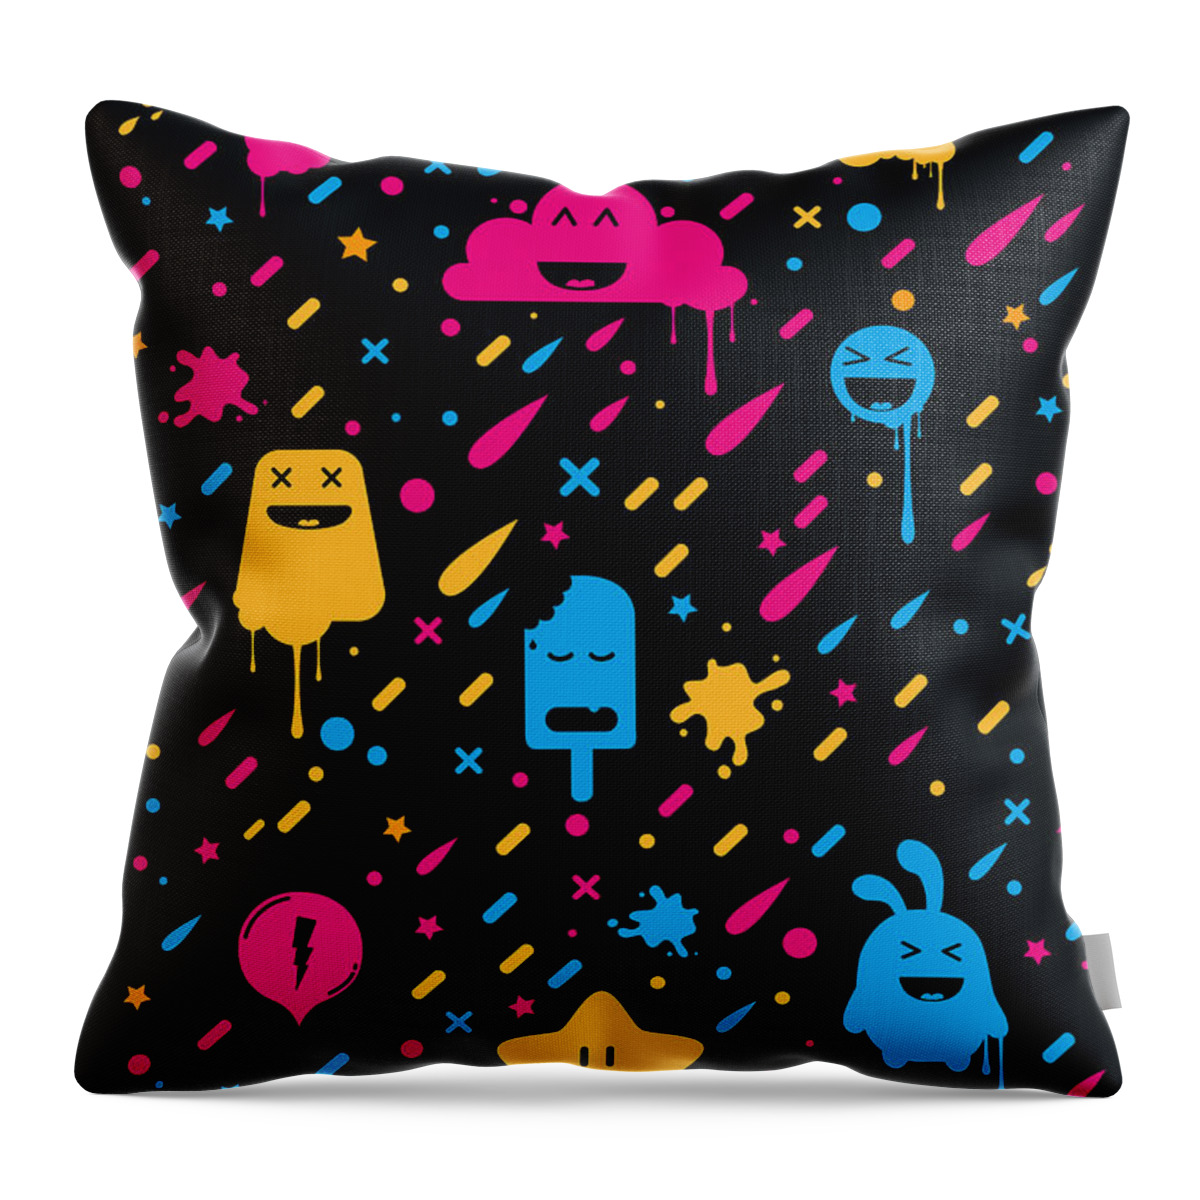 Cute Throw Pillow featuring the digital art Cute Color Stuff by Philipp Rietz